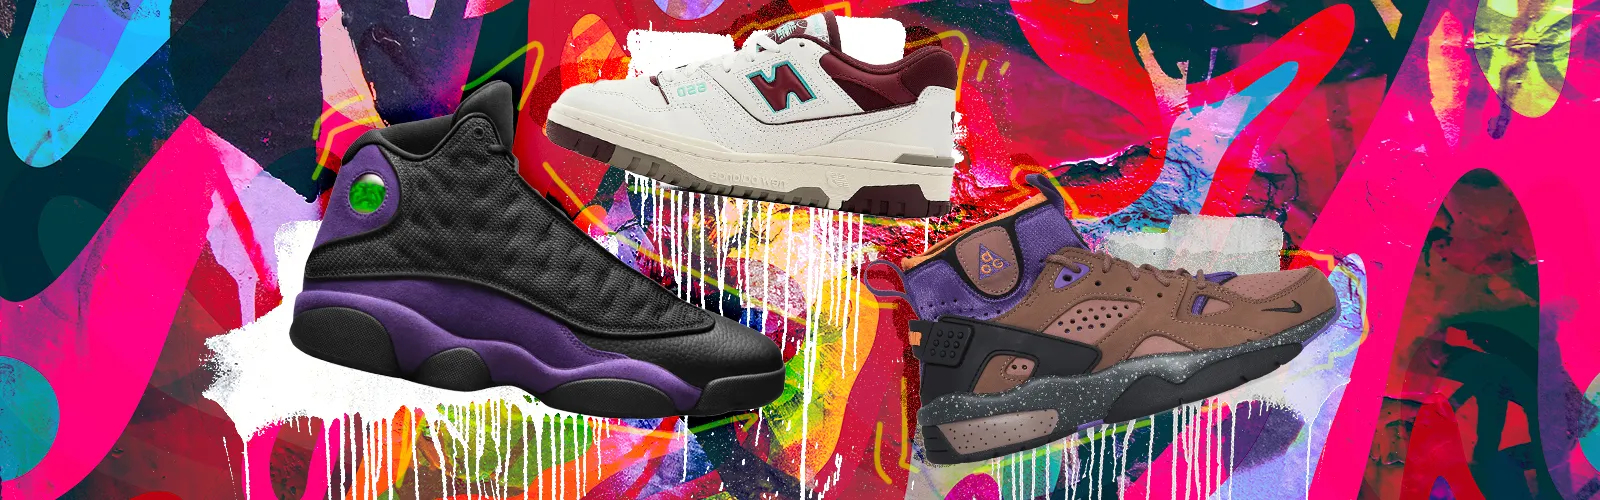  Presenting The KingShirt.com's Unique Collection of Air Jordan 13 Shoes